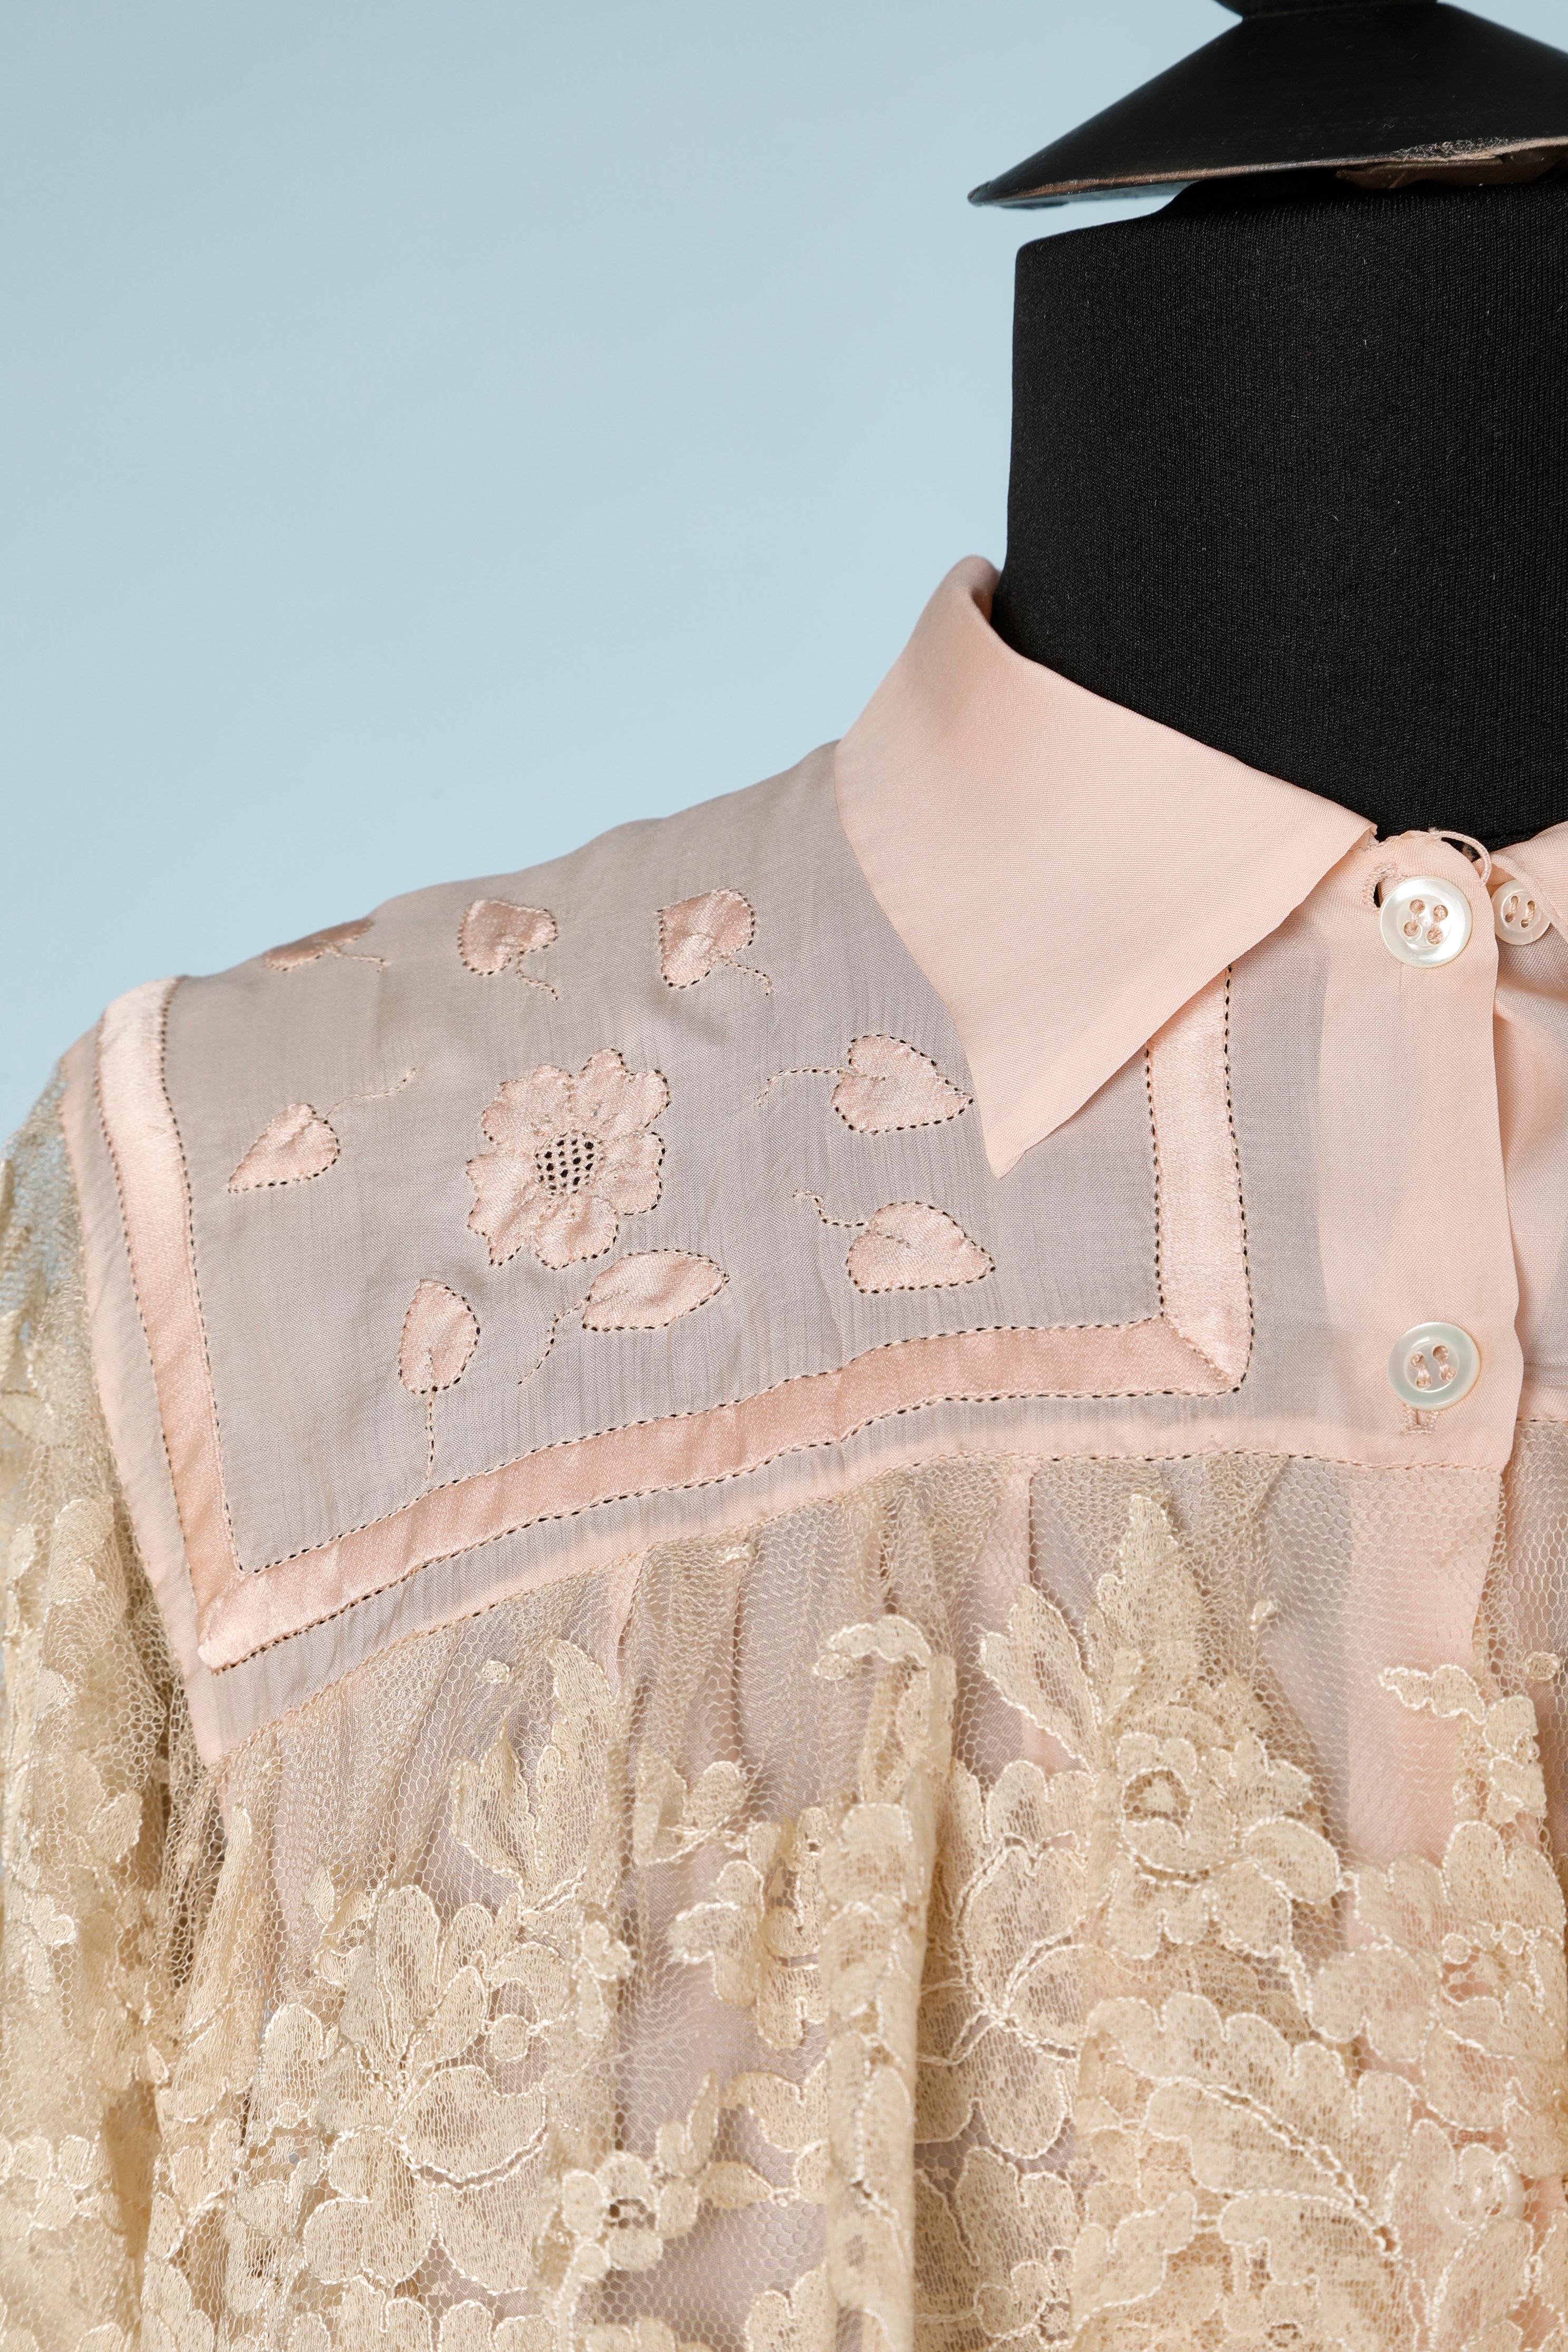 1930's deshabillé in pale pink silk and lace.
Size 38 (Fr) M (Us)